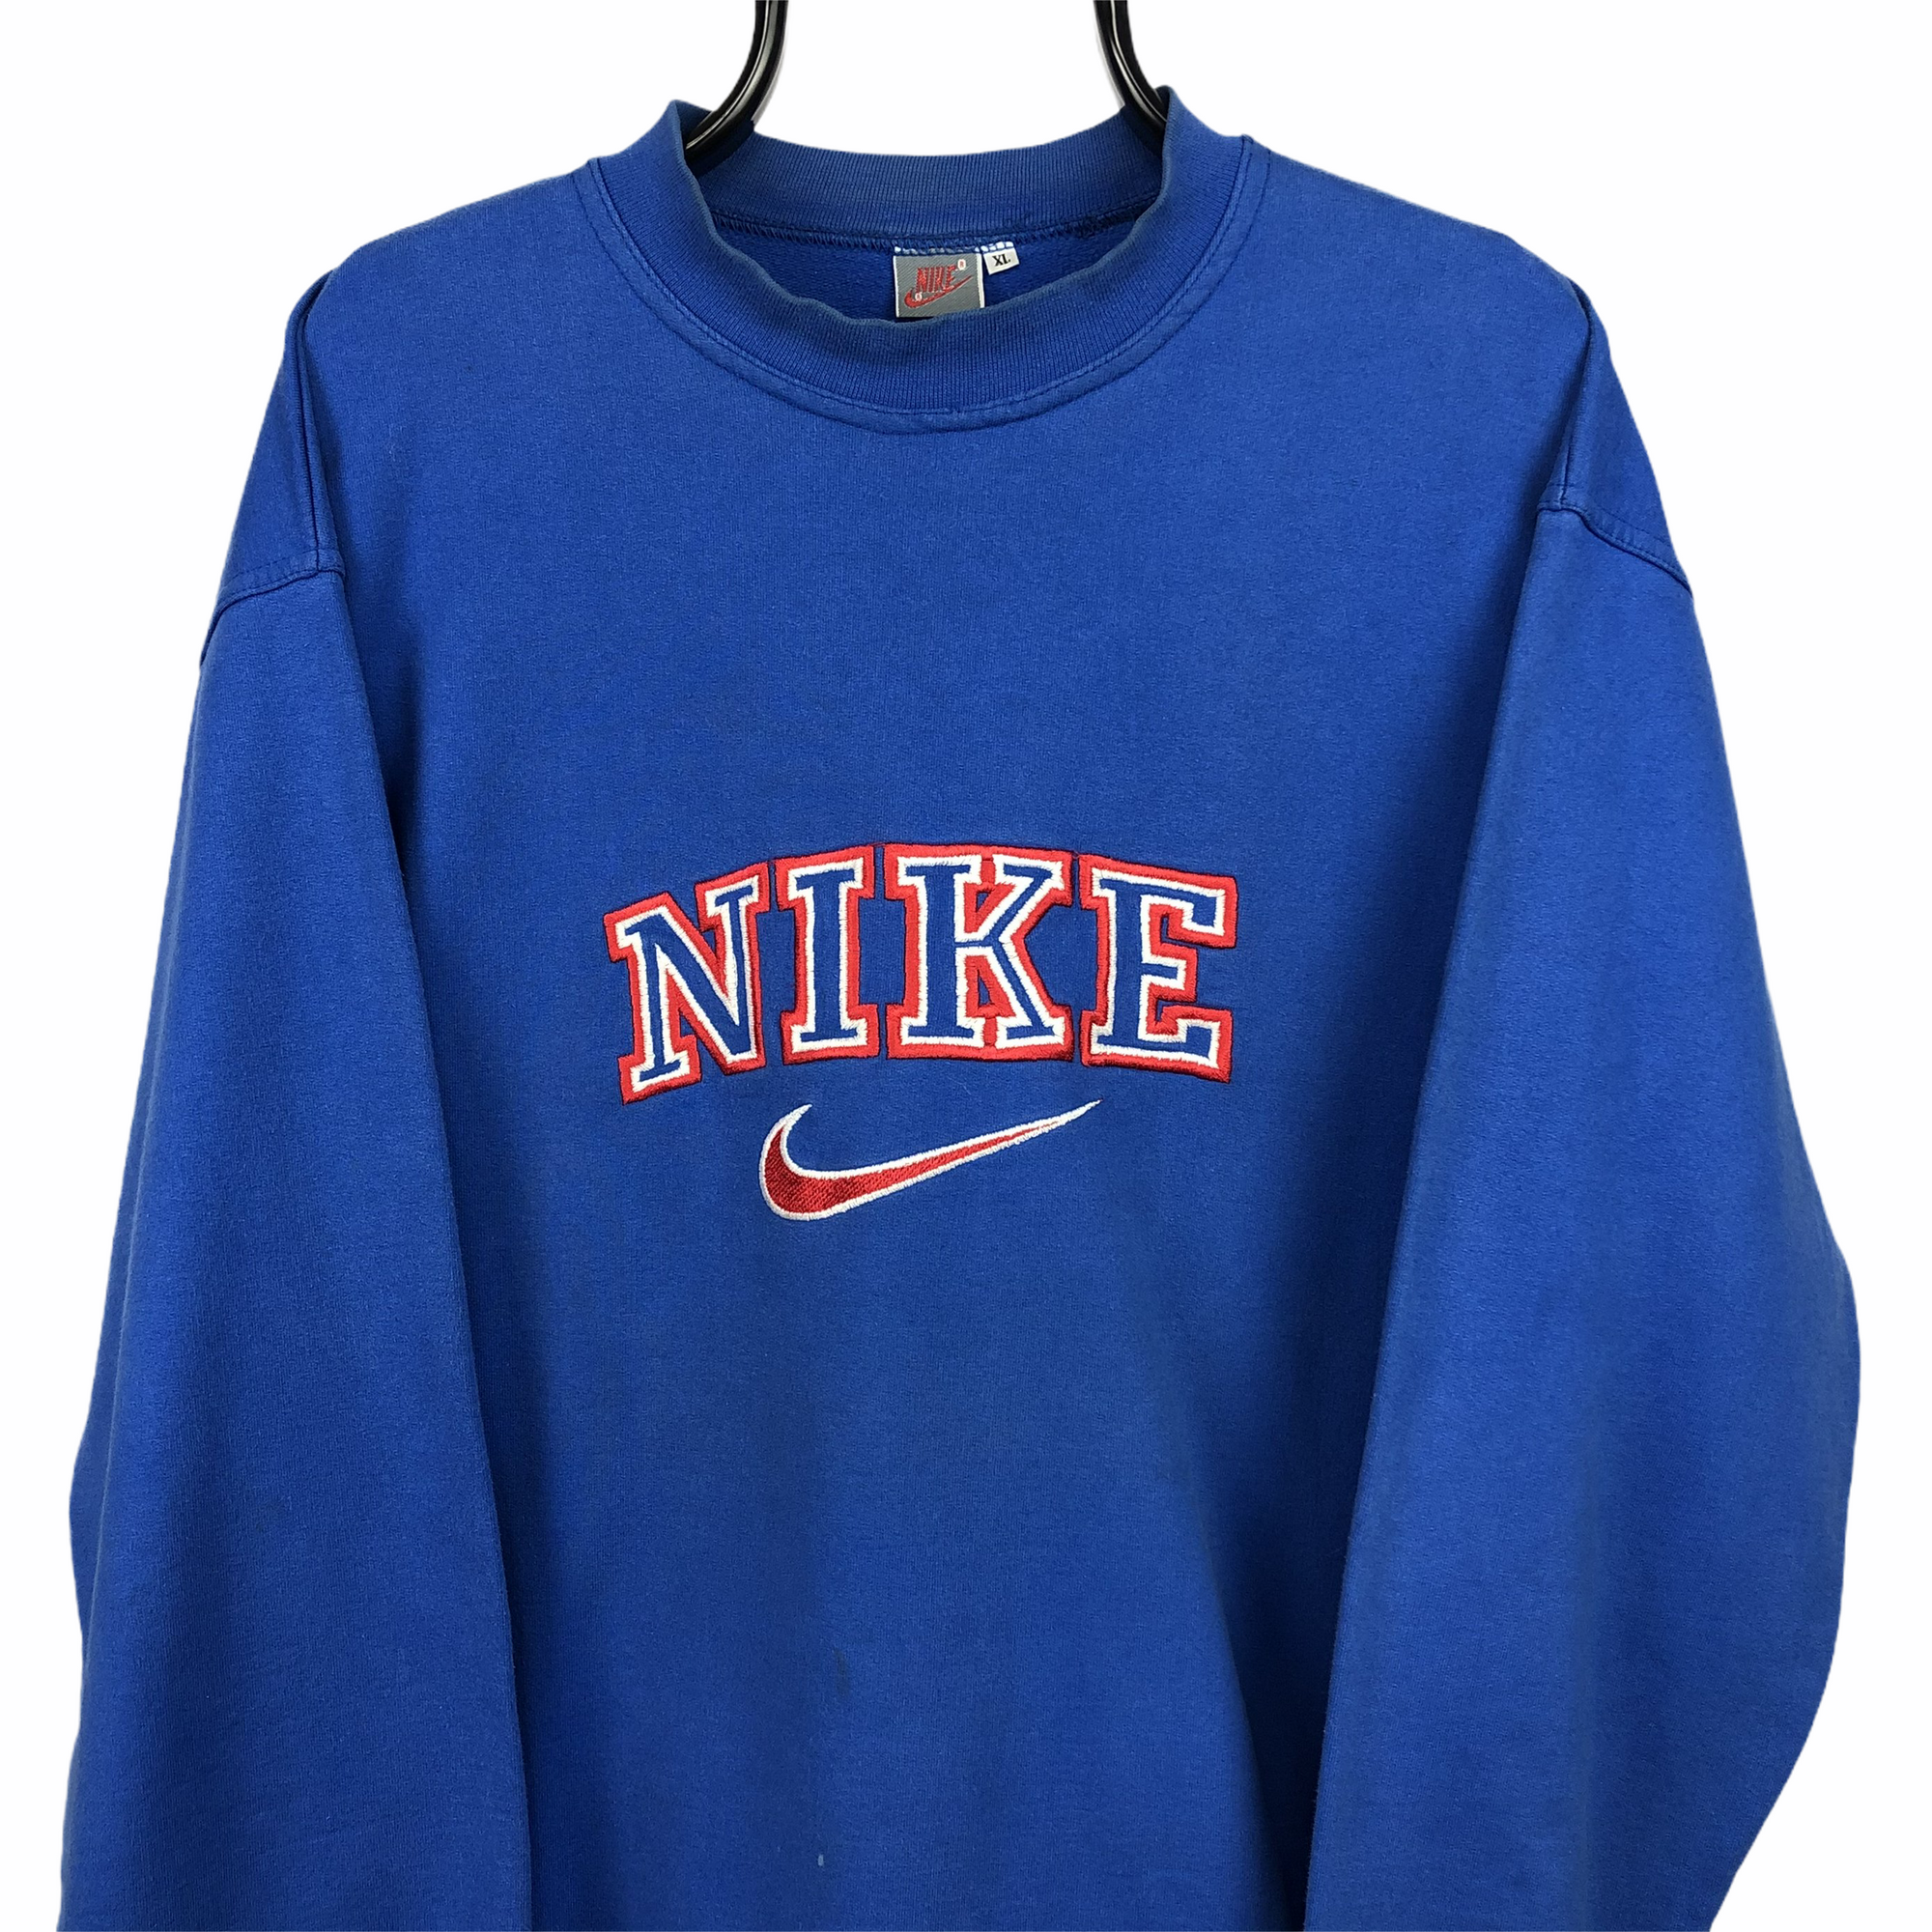 Vintage 90s Nike Spellout Sweatshirt in Blue/Red - Men's Large/Women's XL